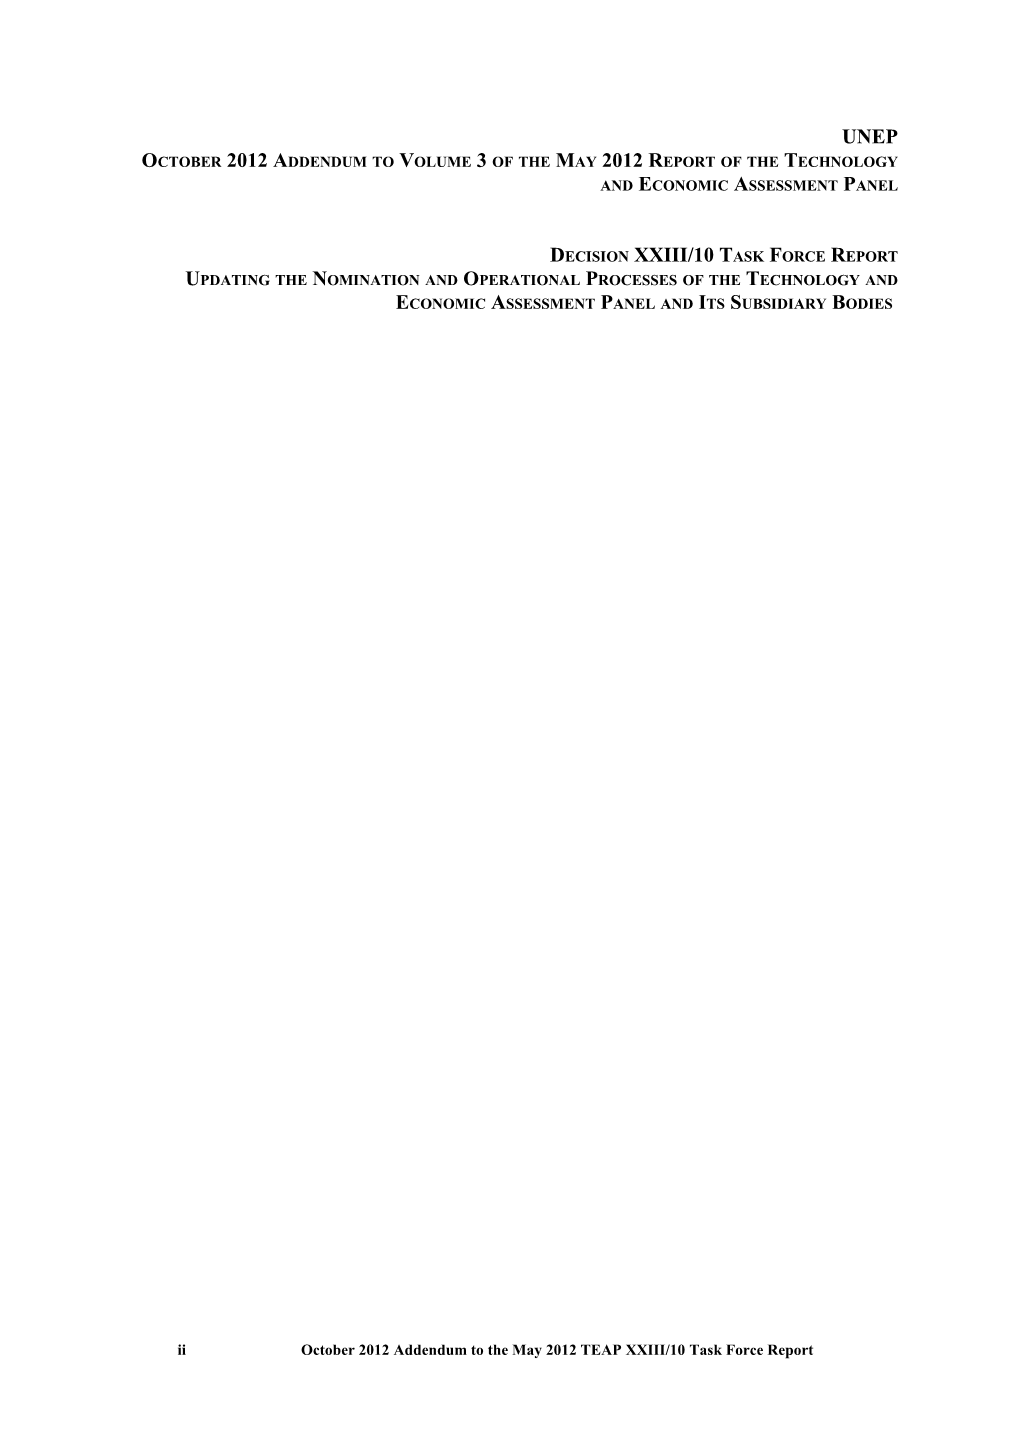 Addendum to TEAP May 2012 Decision XXIII/10 Task Force Report (Vol. 3)